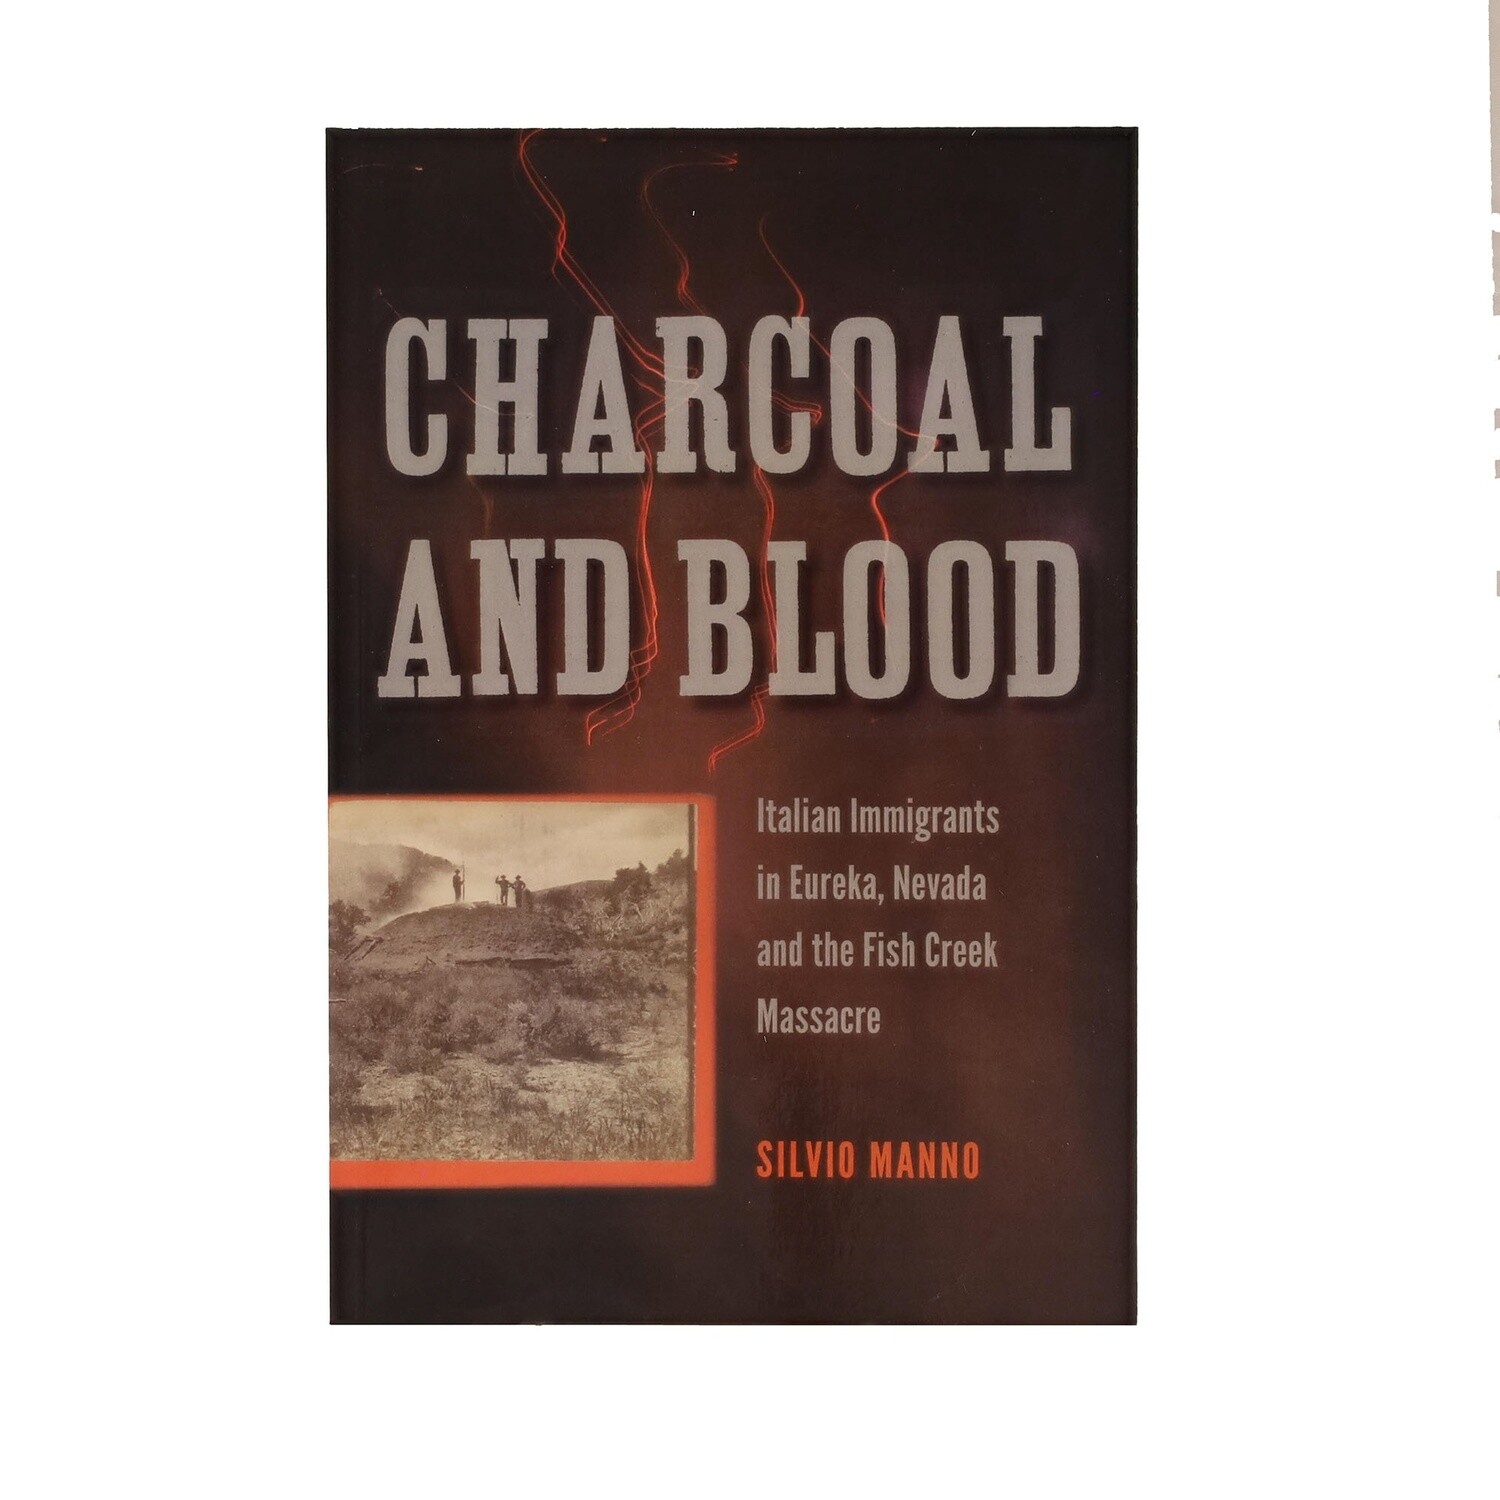 Charcoal and Blood Italian Immigrants in Eureka, Nevada and the Fish Creek Massacre by Silvio Manno